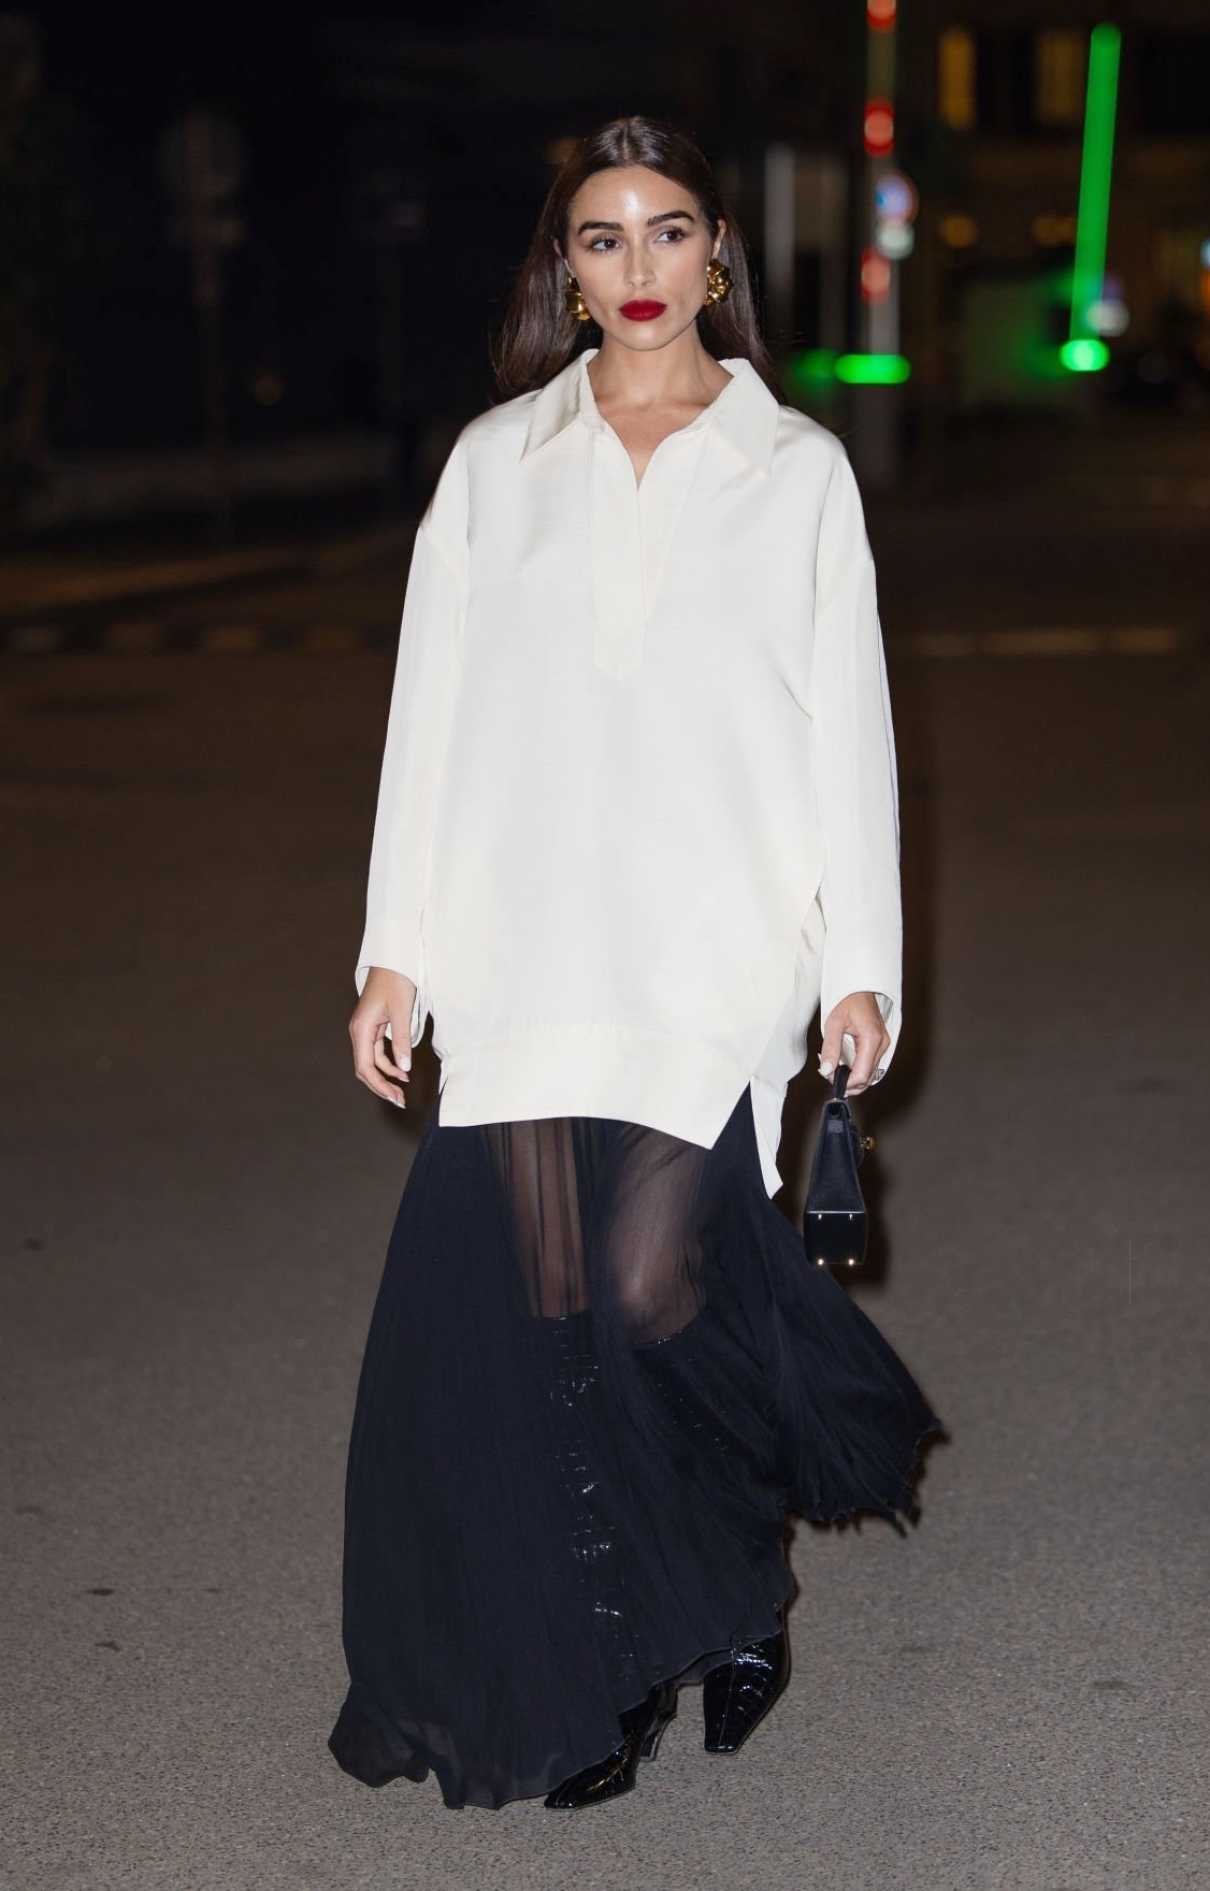 Olivia Culpo in a Black Skirt